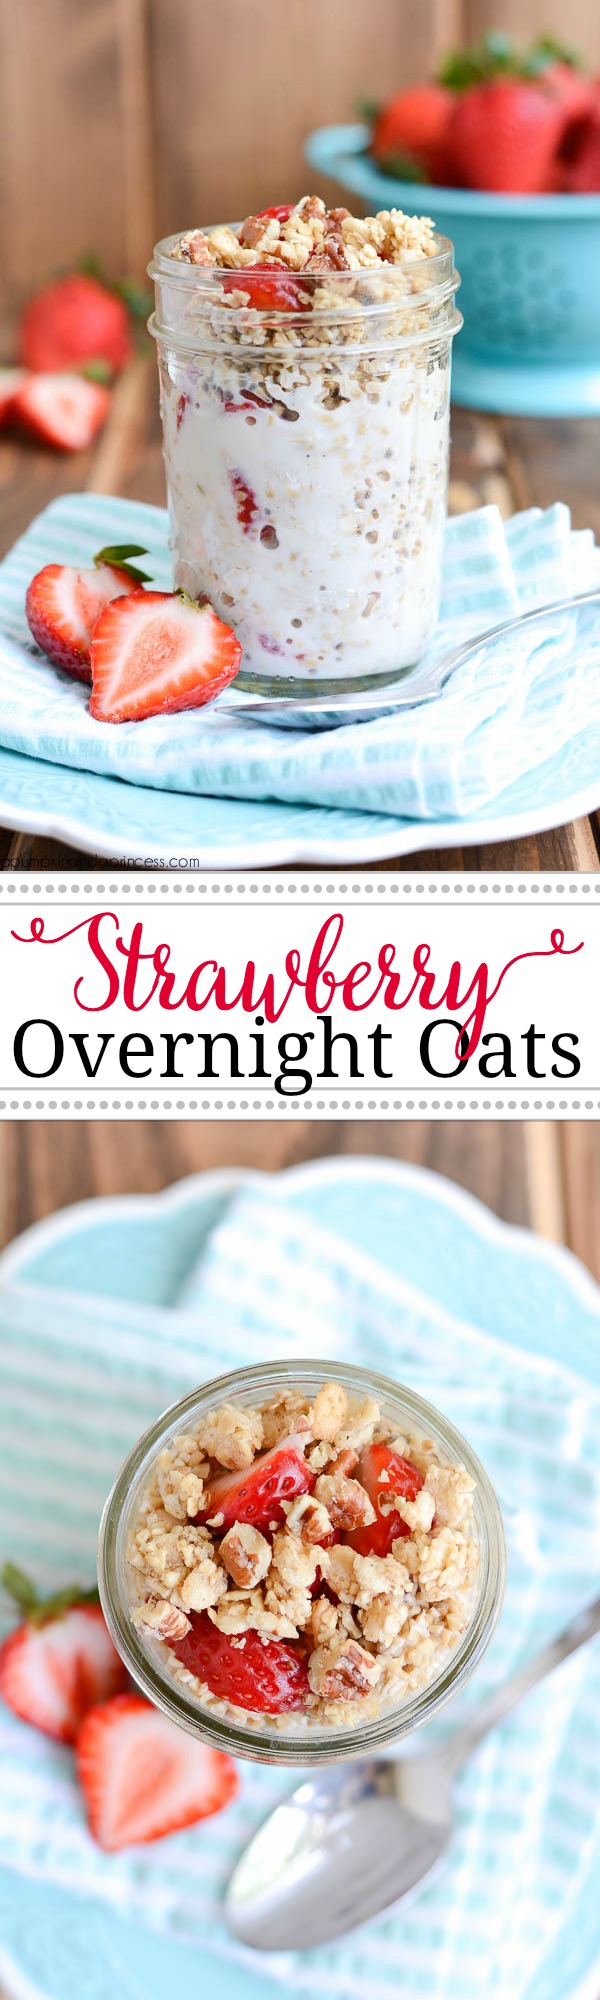 Strawberry Overnight Oats